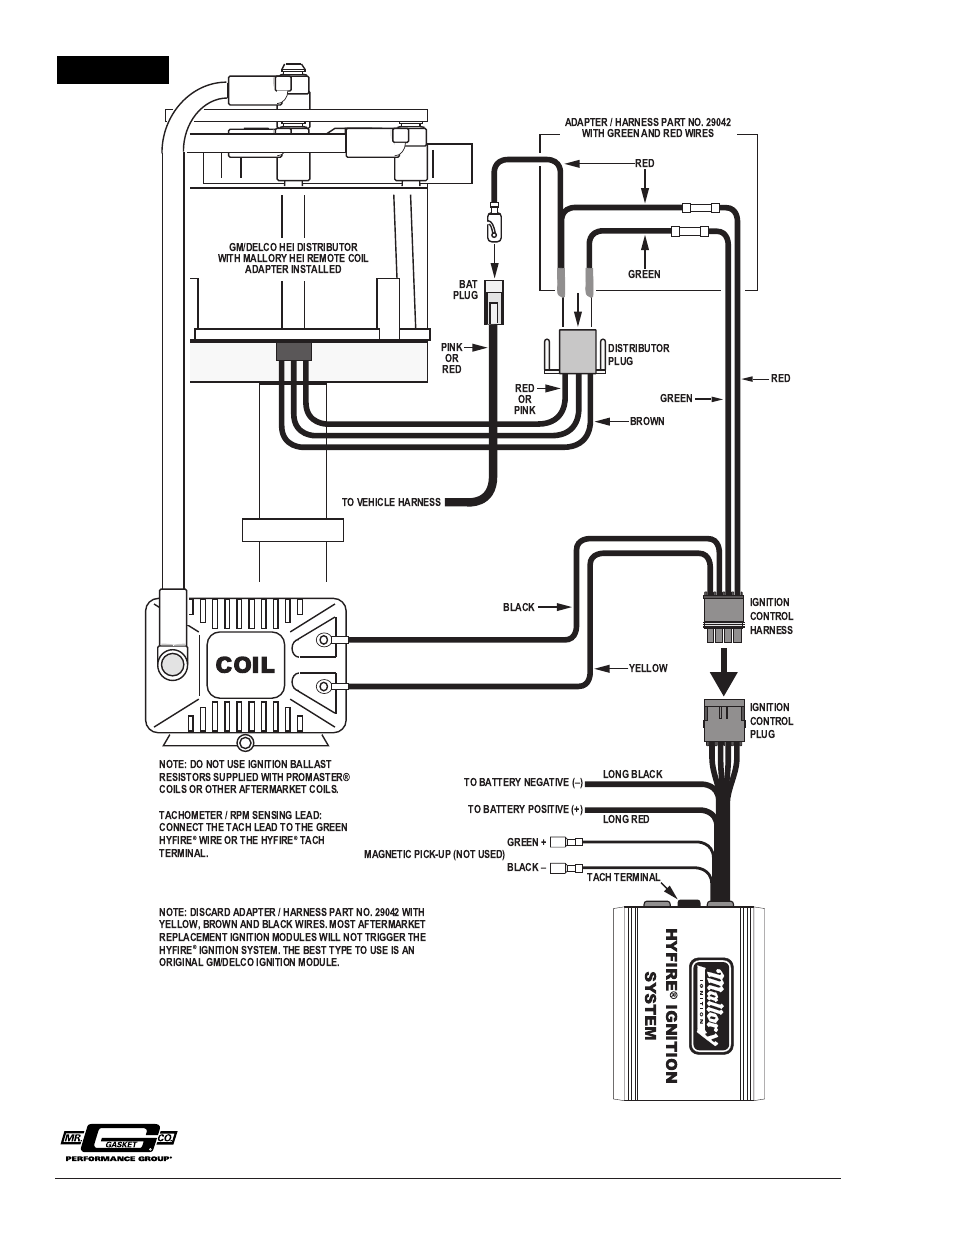 Mallory 6Al Wiring Diagram from schematron.org